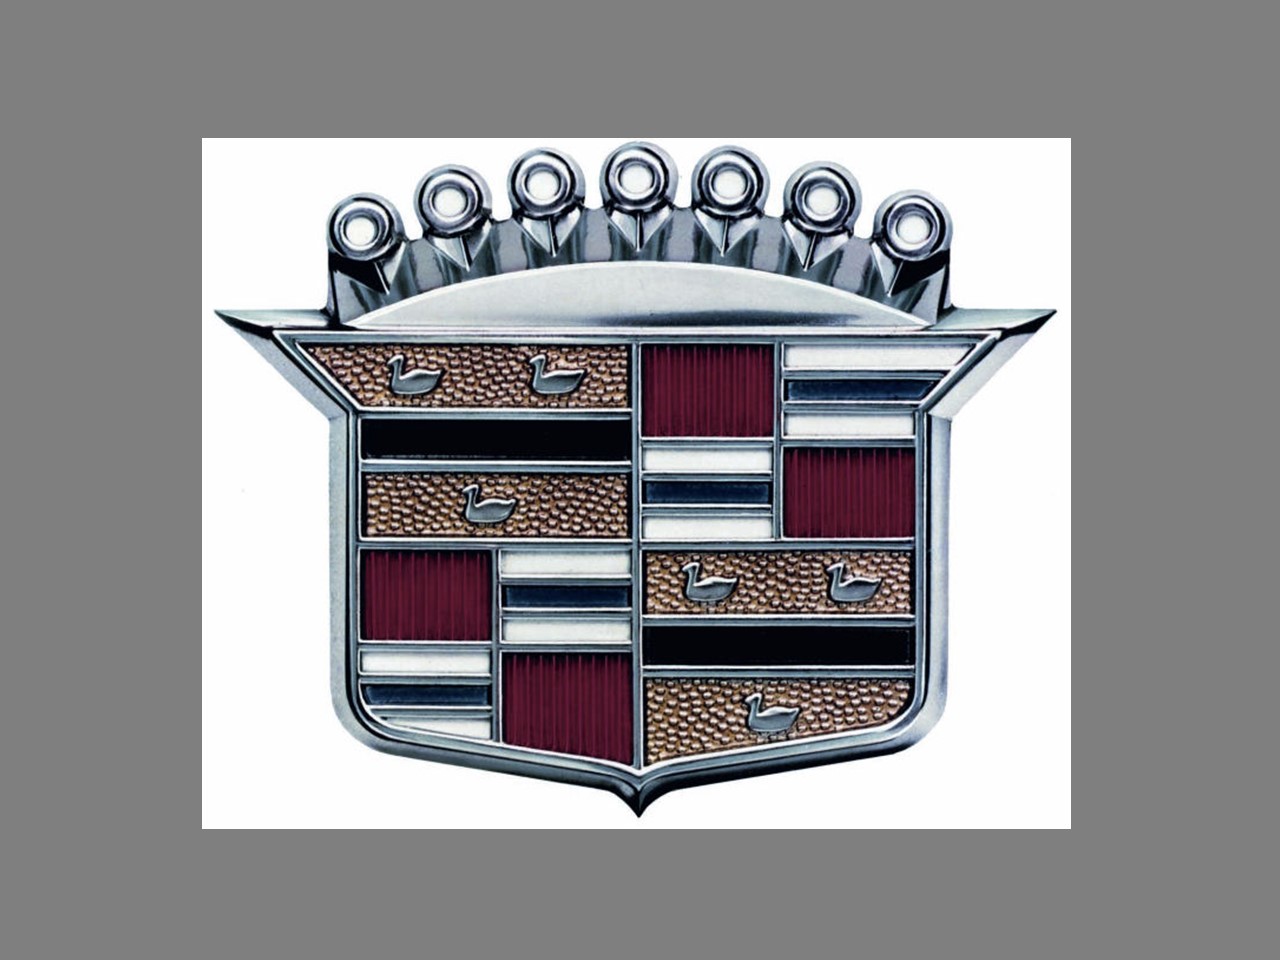 Cadillac Crest